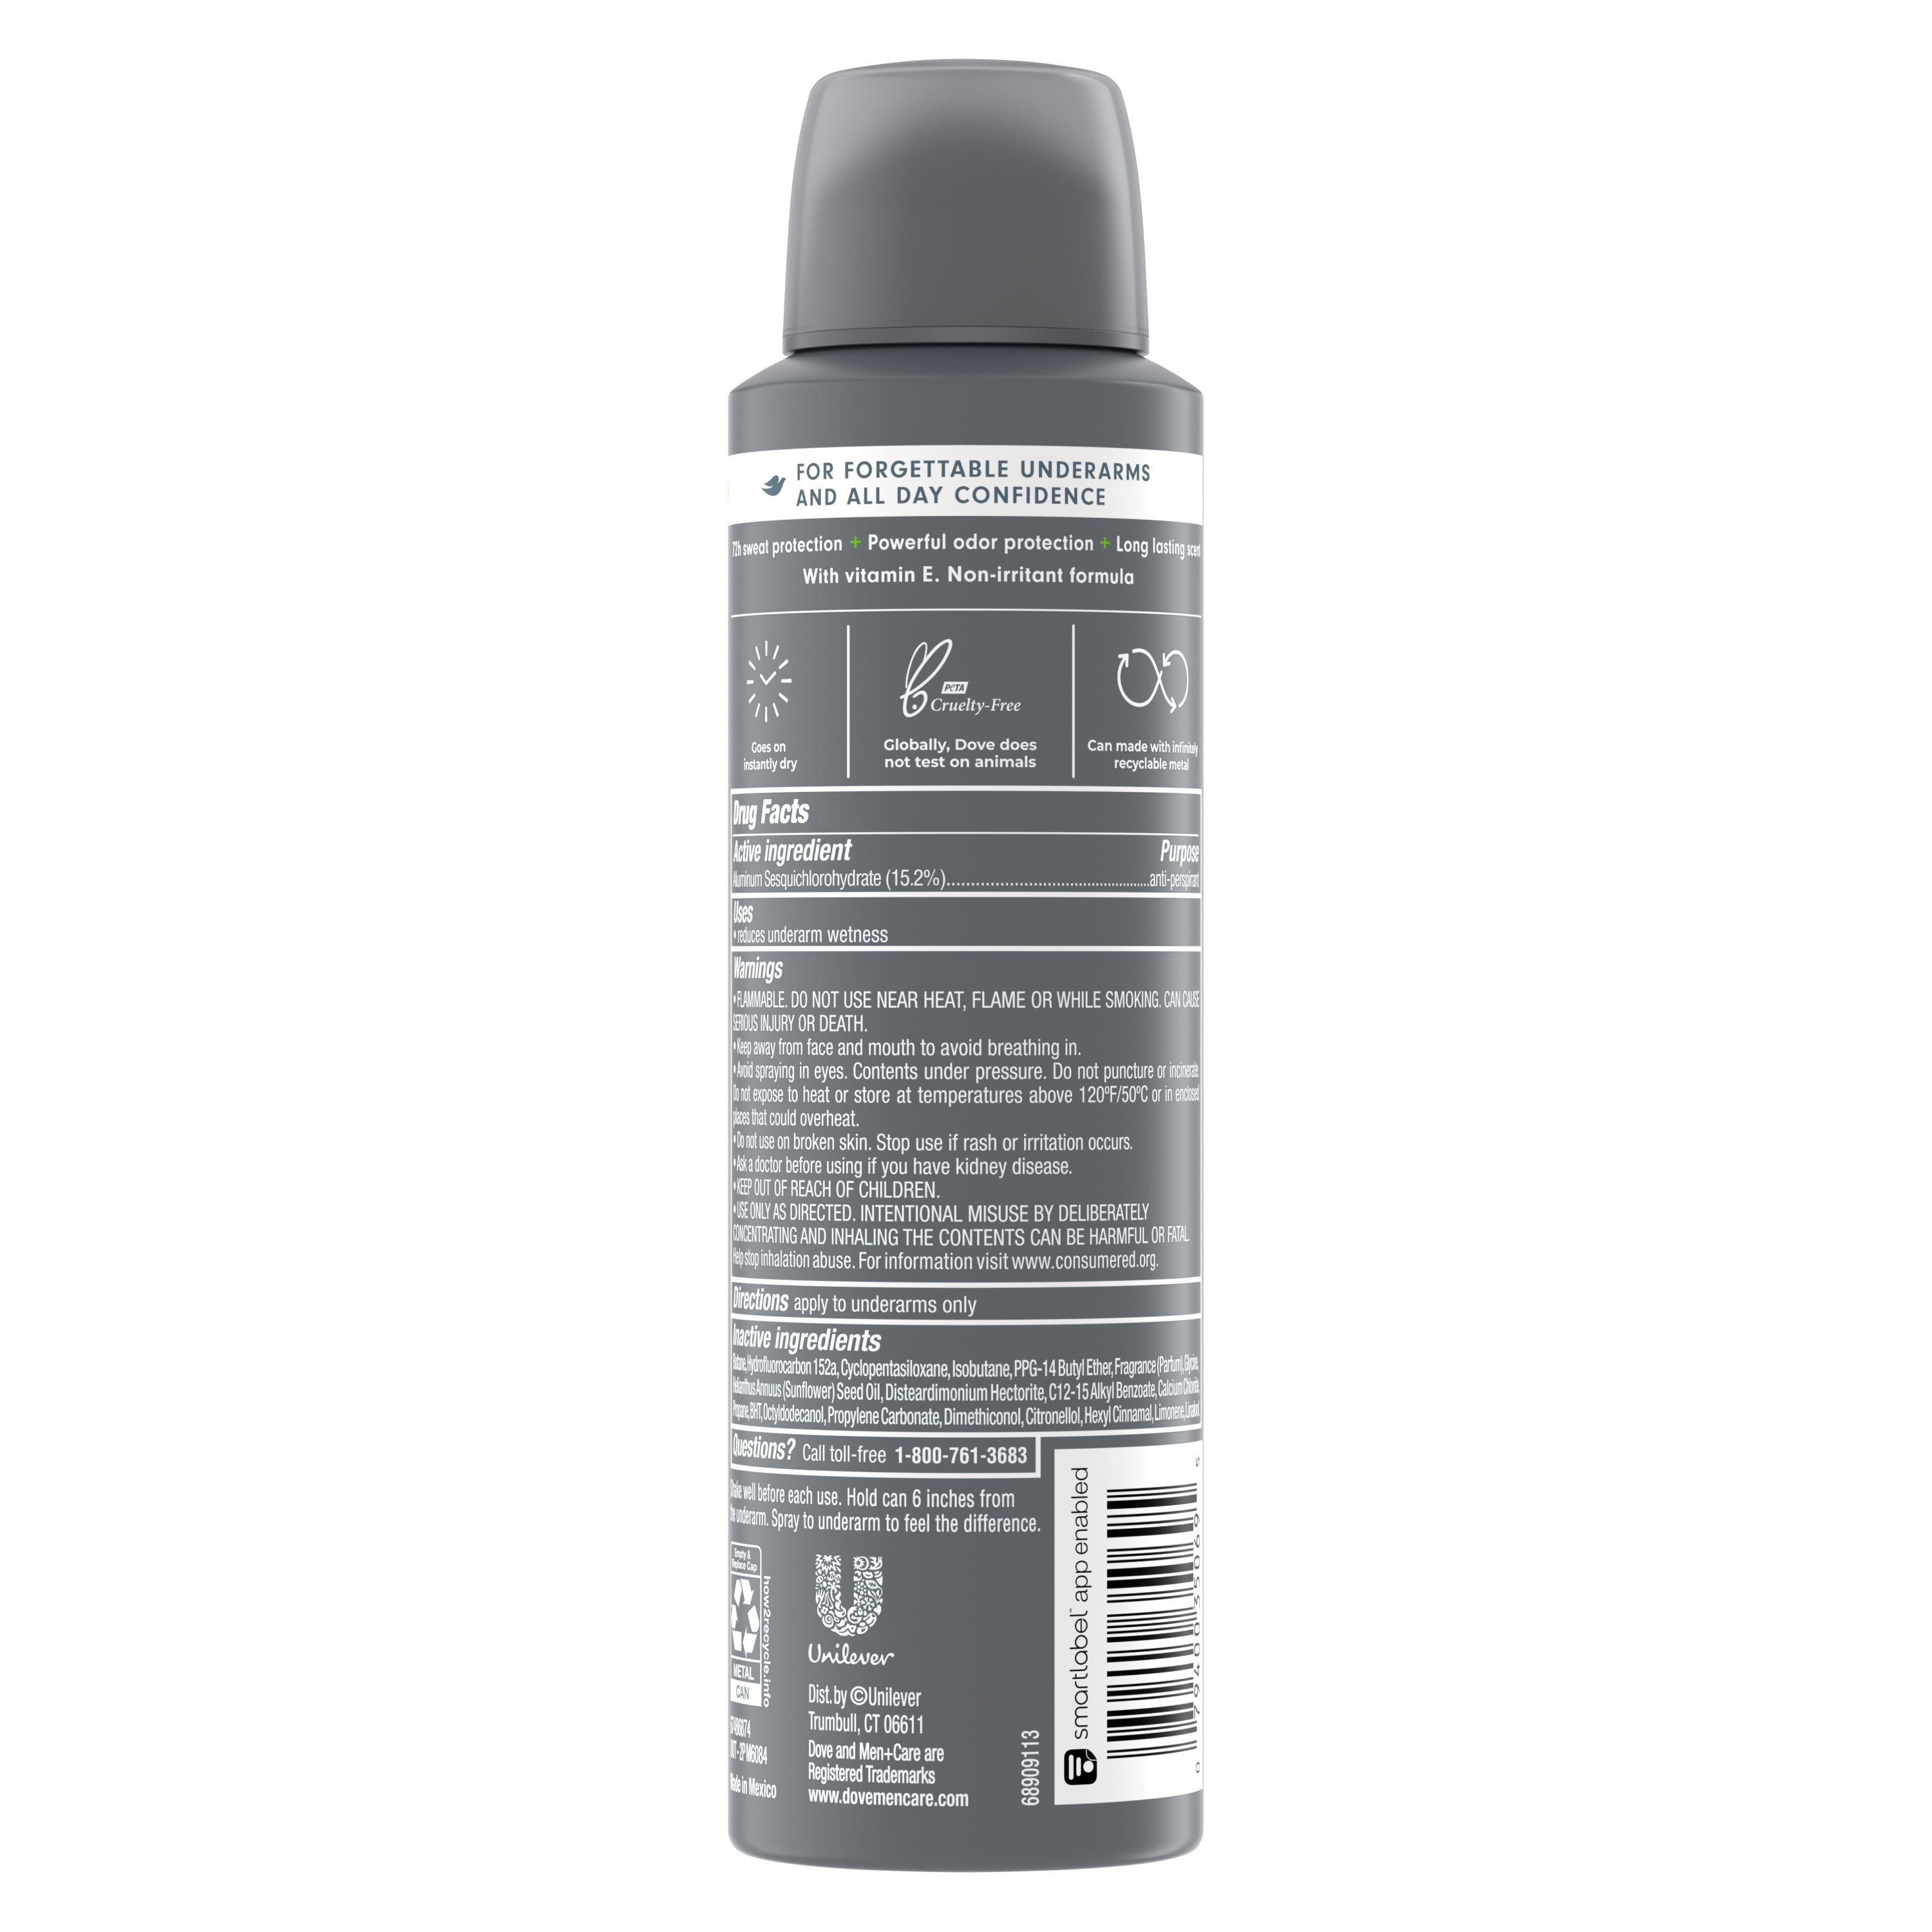 Dove Advanced Care Dry Spray Antiperspirant Deodorant Lavender Fresh, -  Shop Deodorant & Antiperspirant at H-E-B